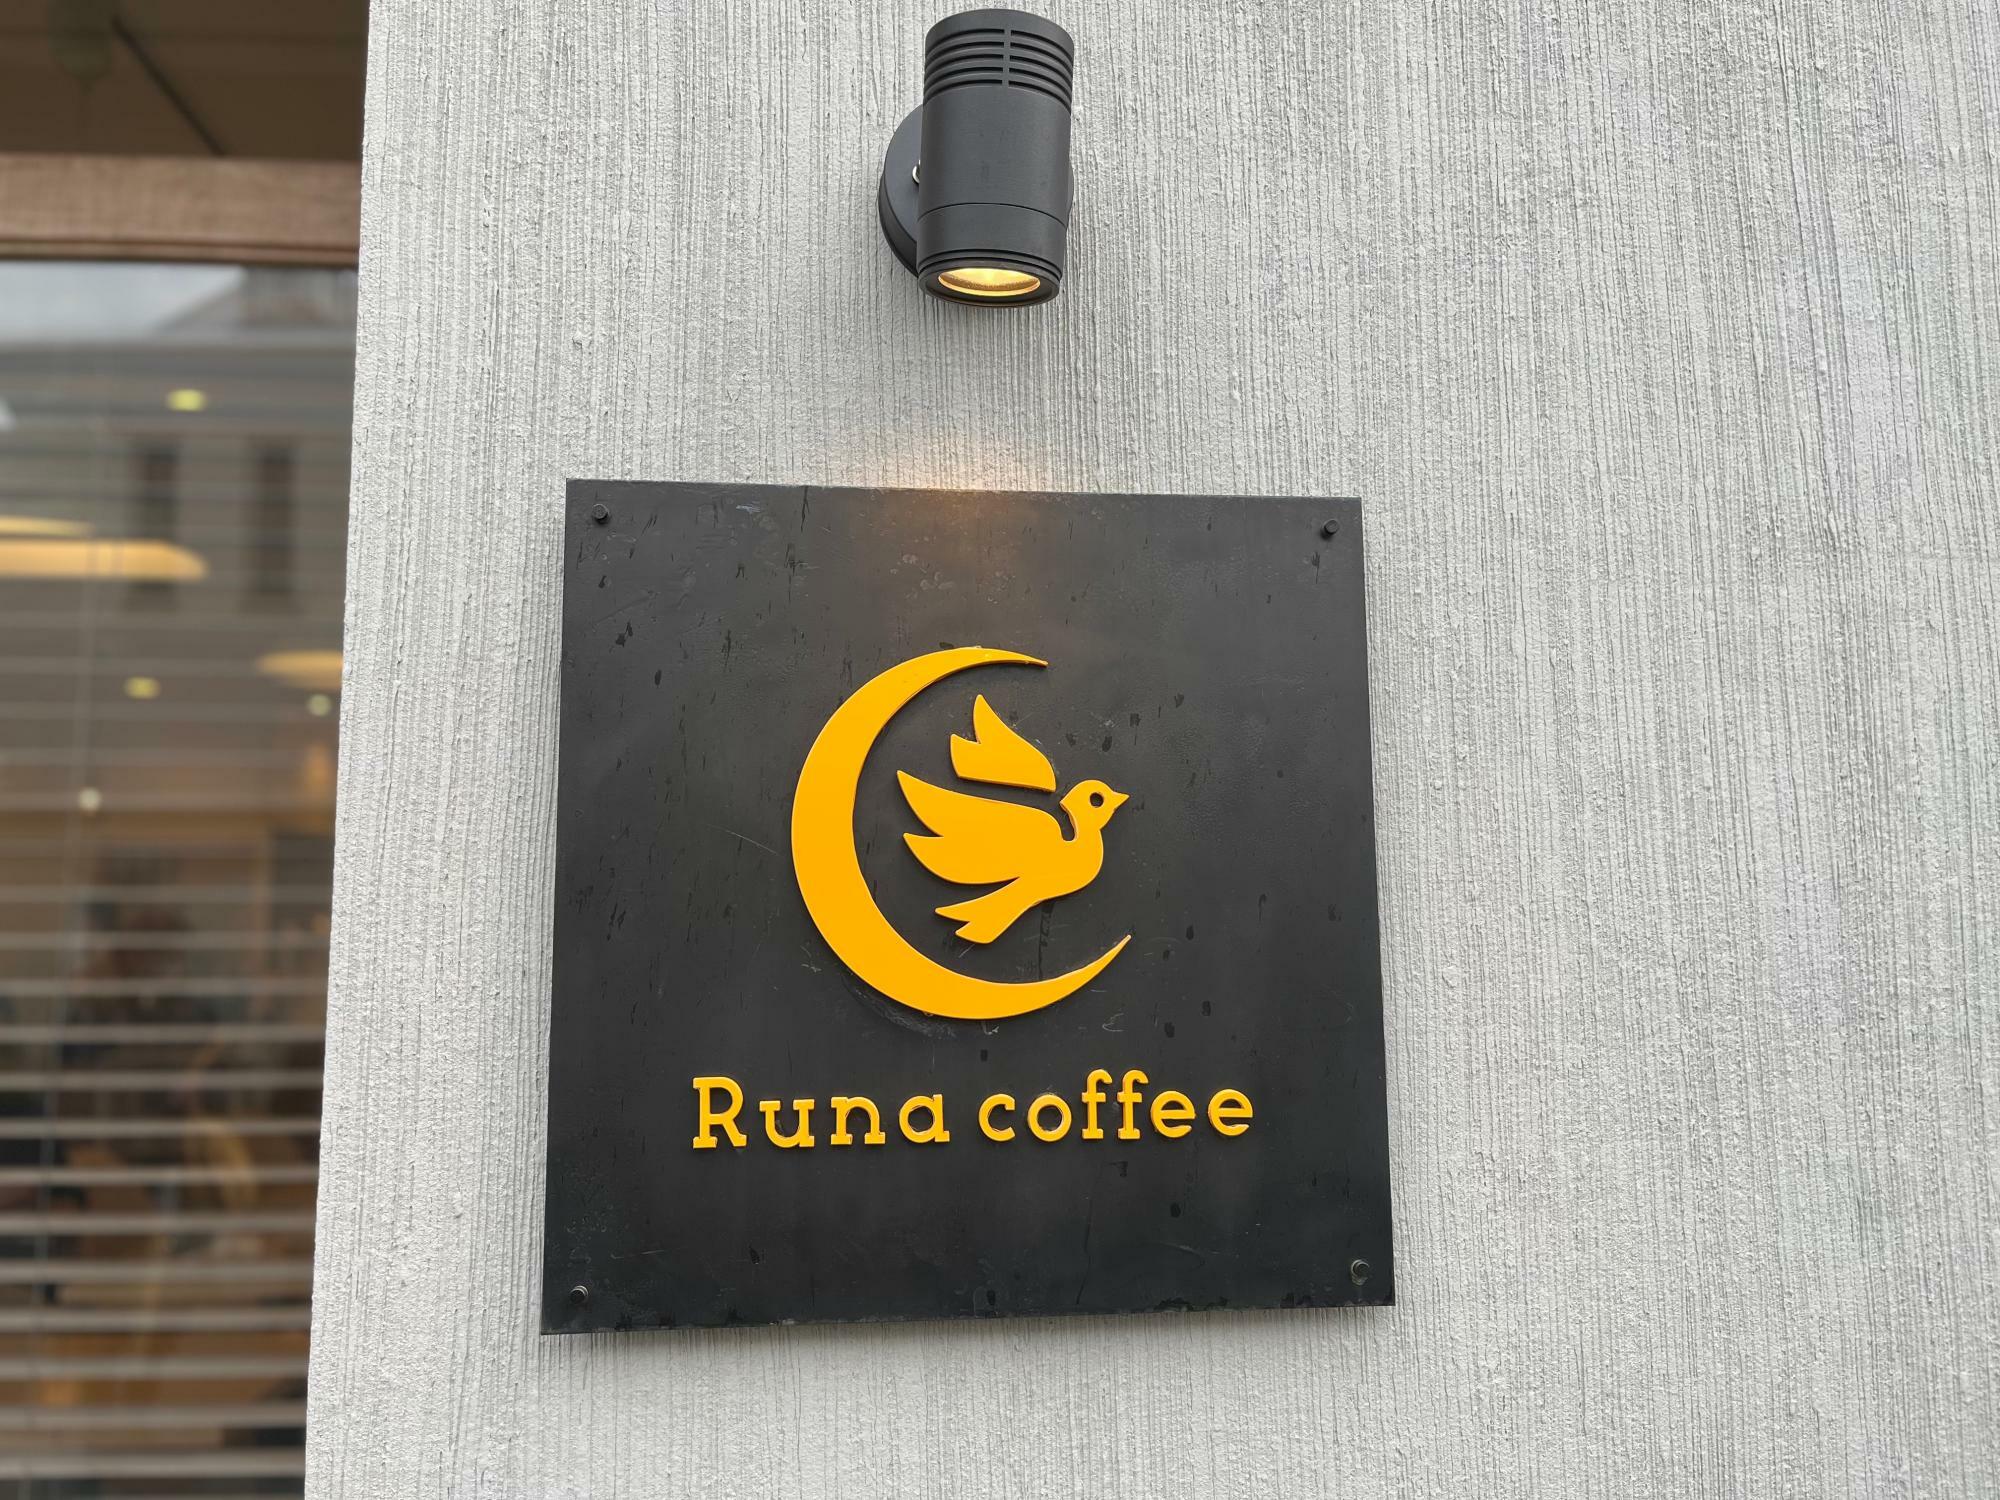 Runa coffee